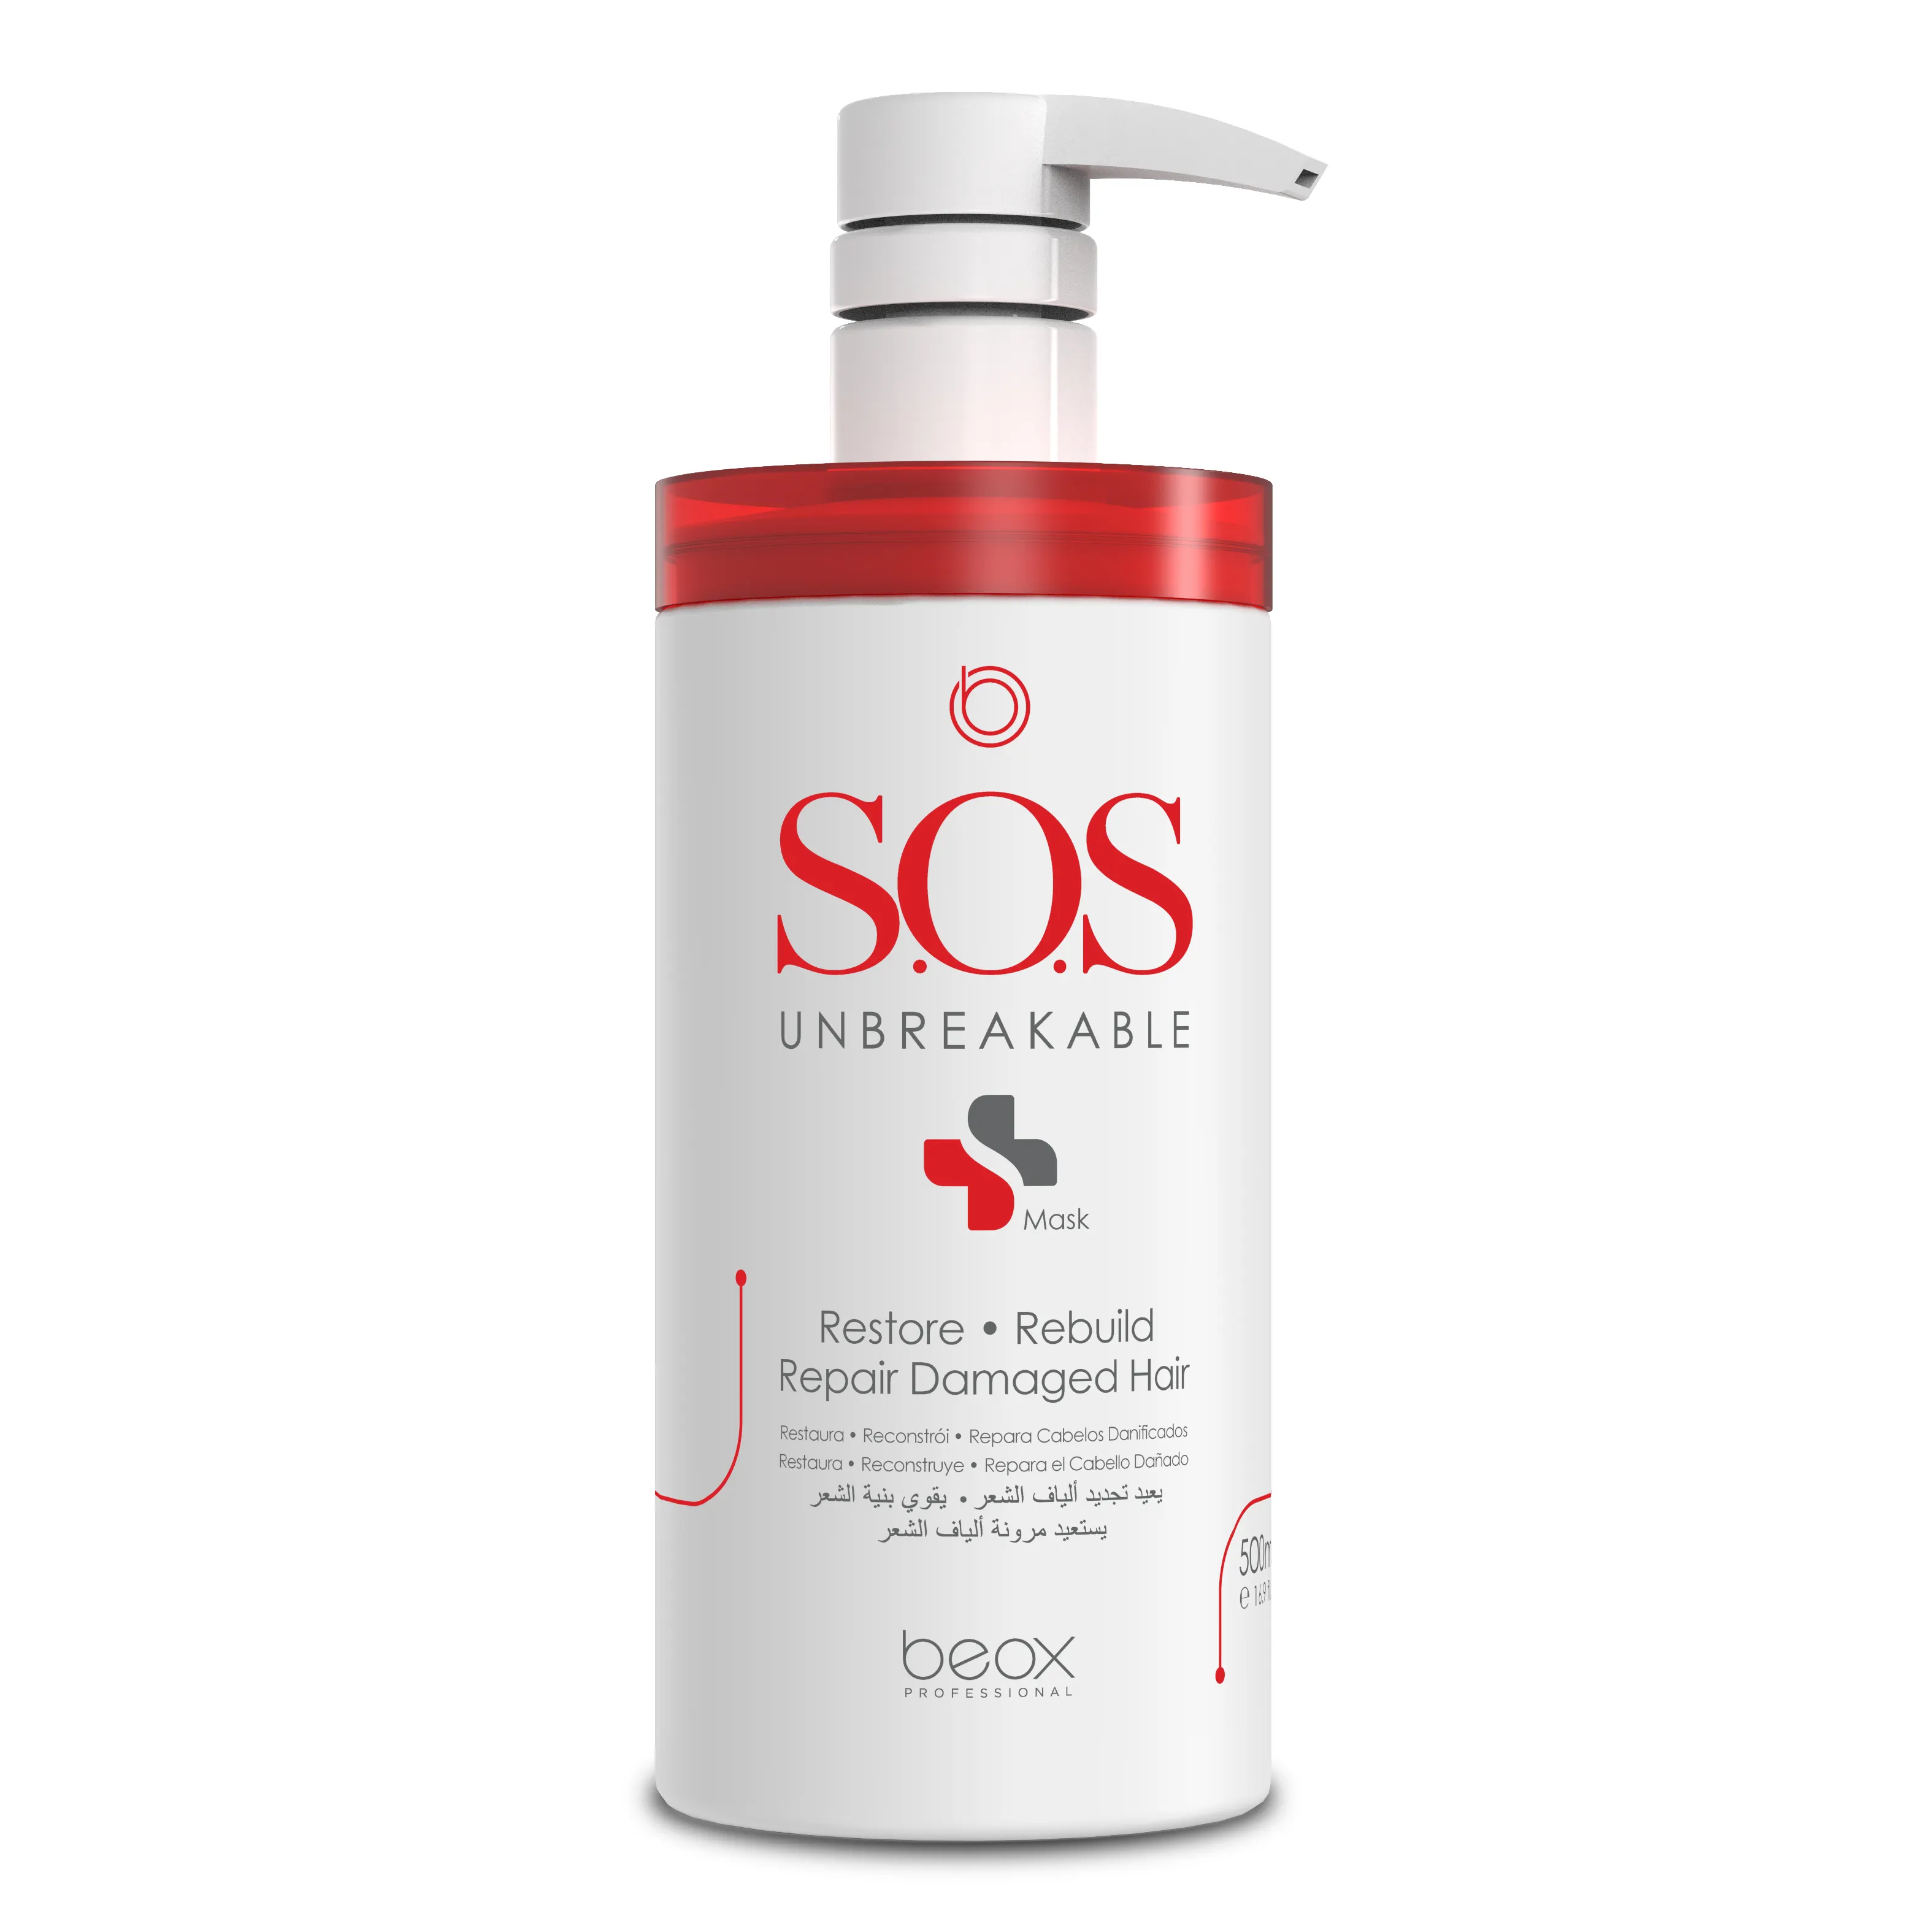 SOS-solución instantánea irrompible para cabello dañado, hecha con aminoácidos potentes y aceites nutritivos